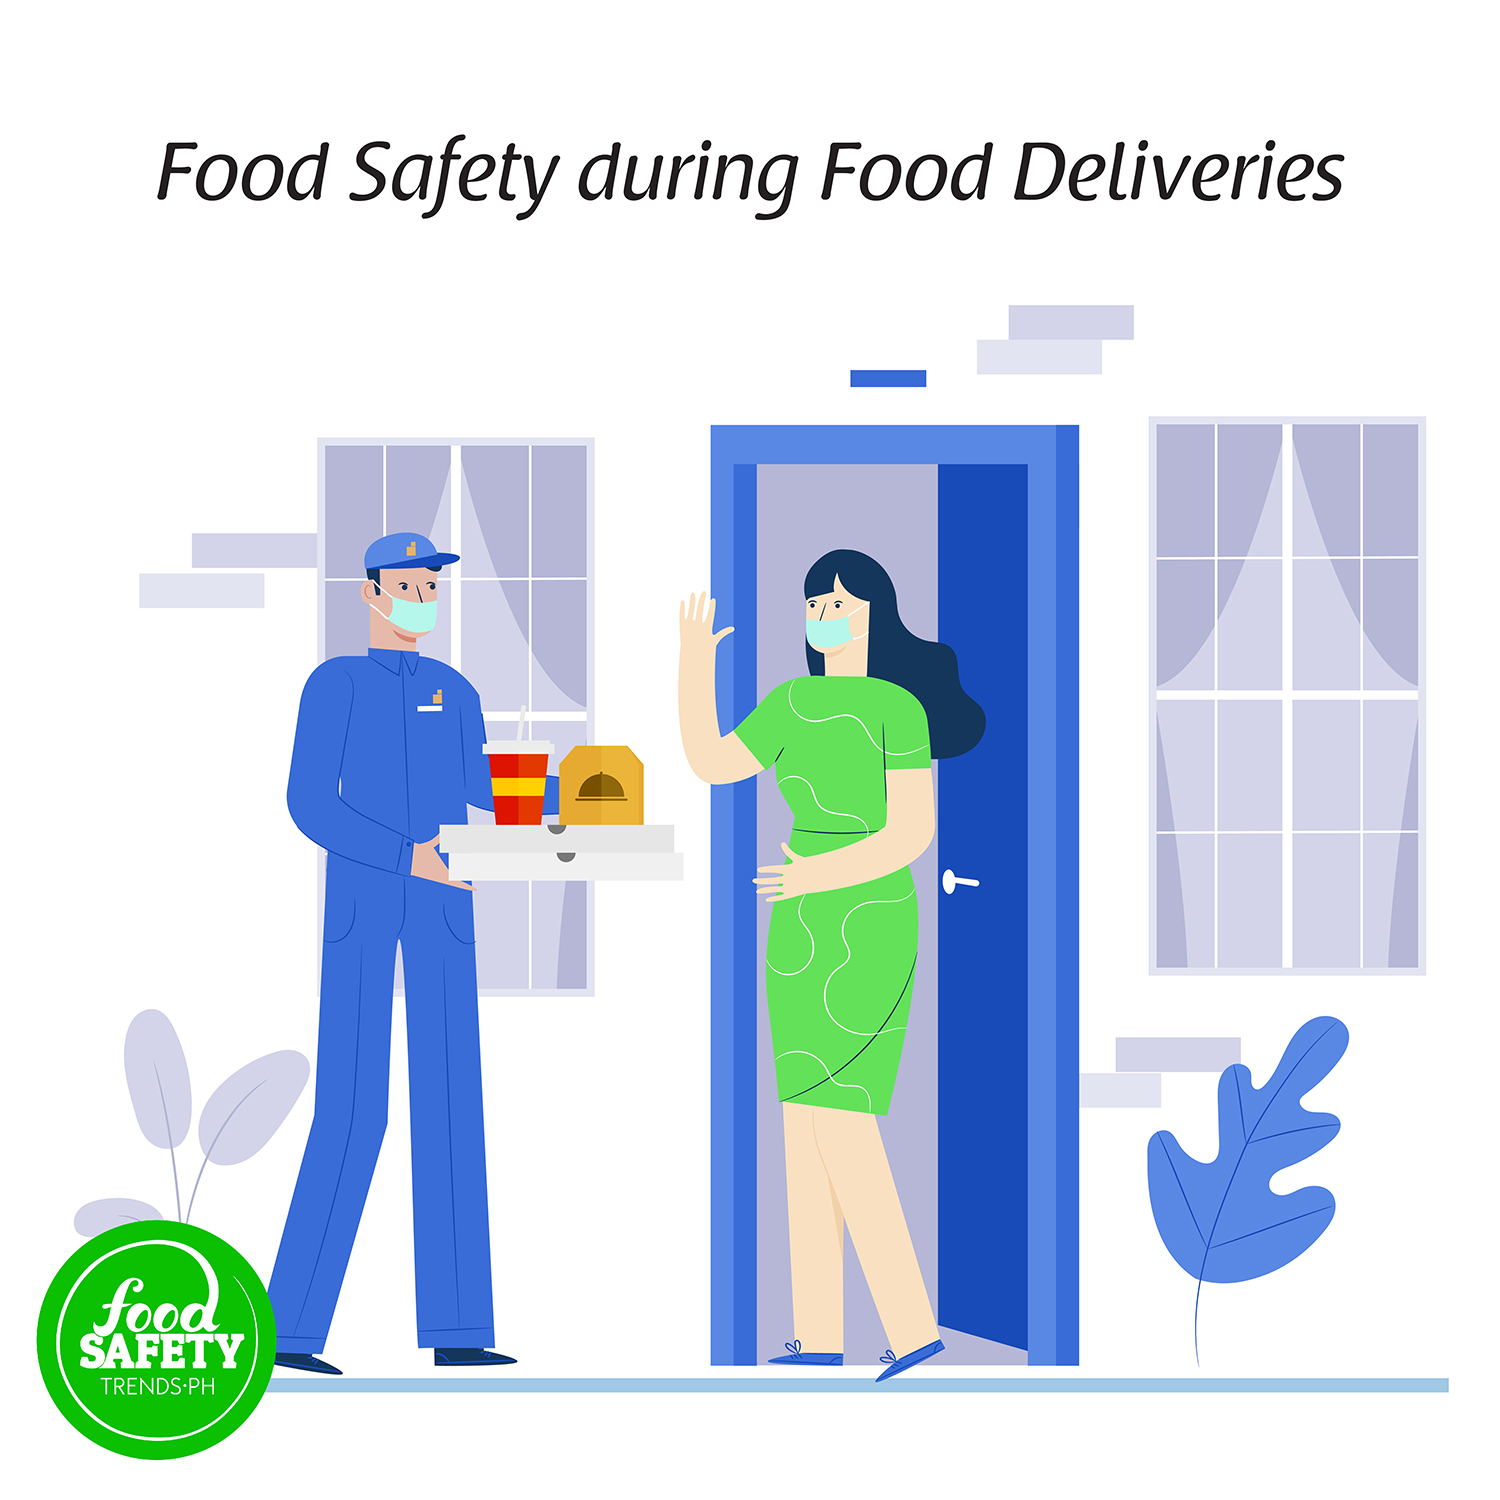 Food Safety during Food Deliveries